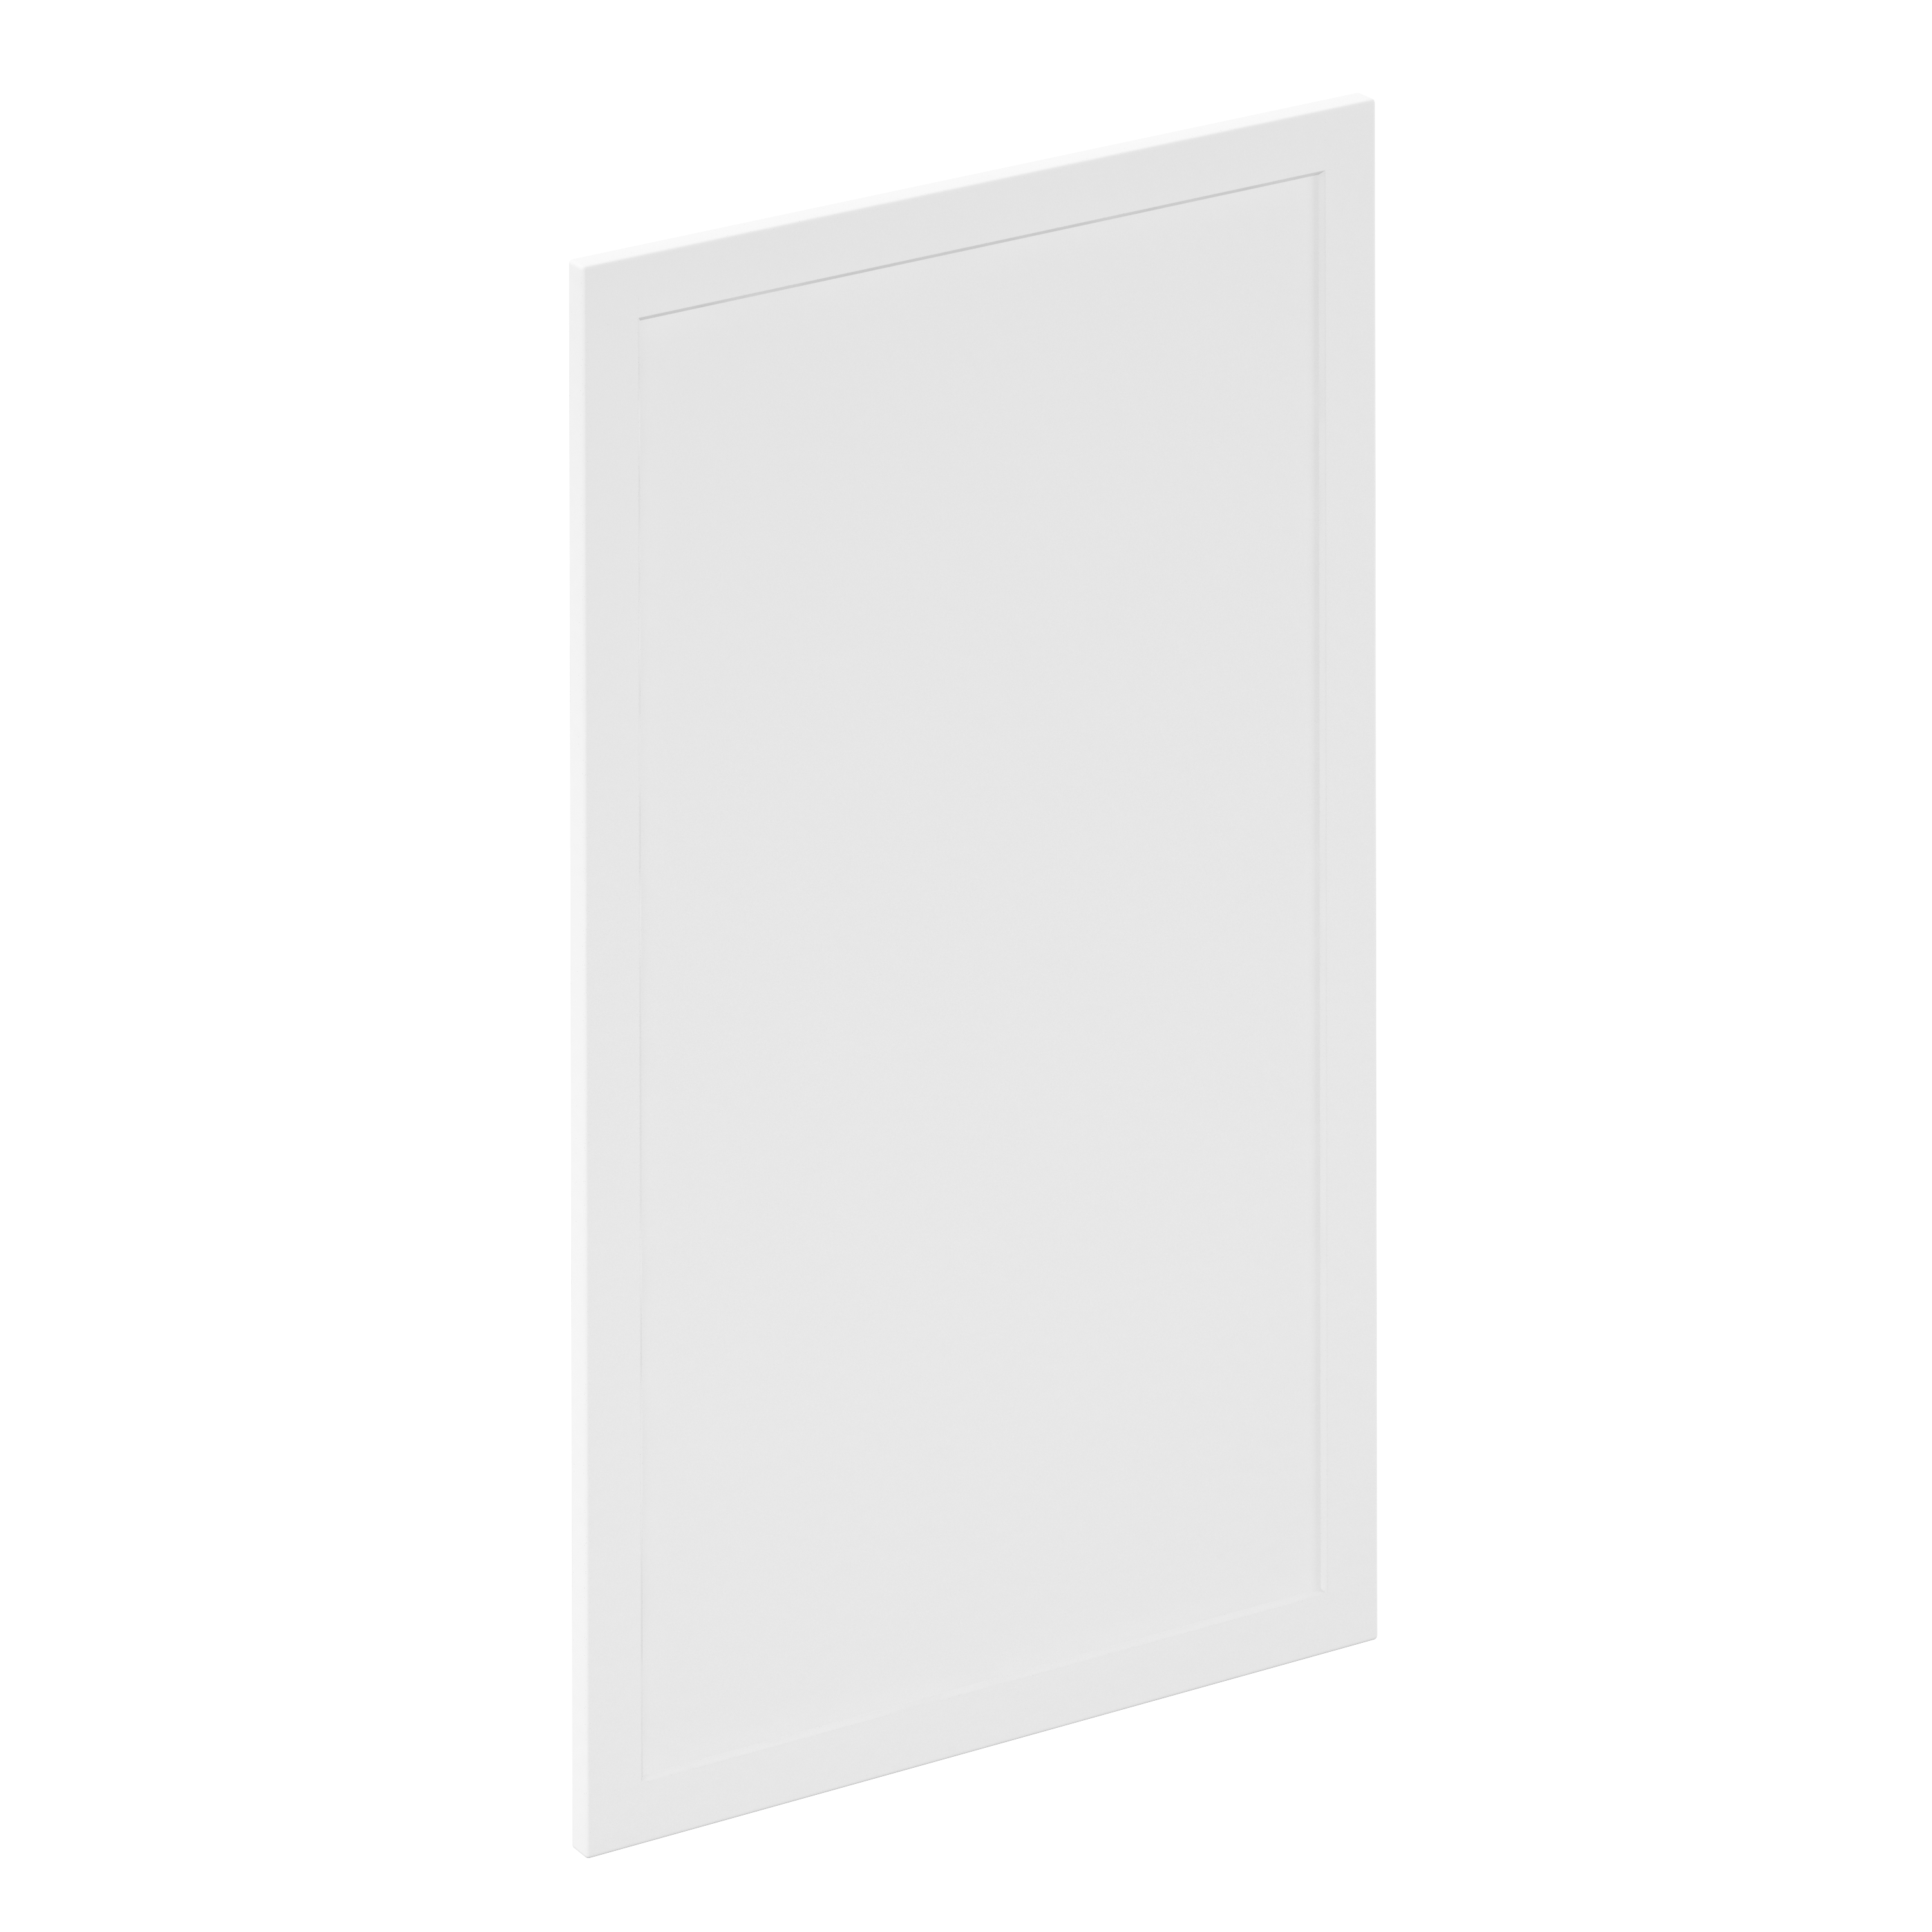 Puerta para mueble de cocina newport blanco mate h 102.4 x l 60 cm